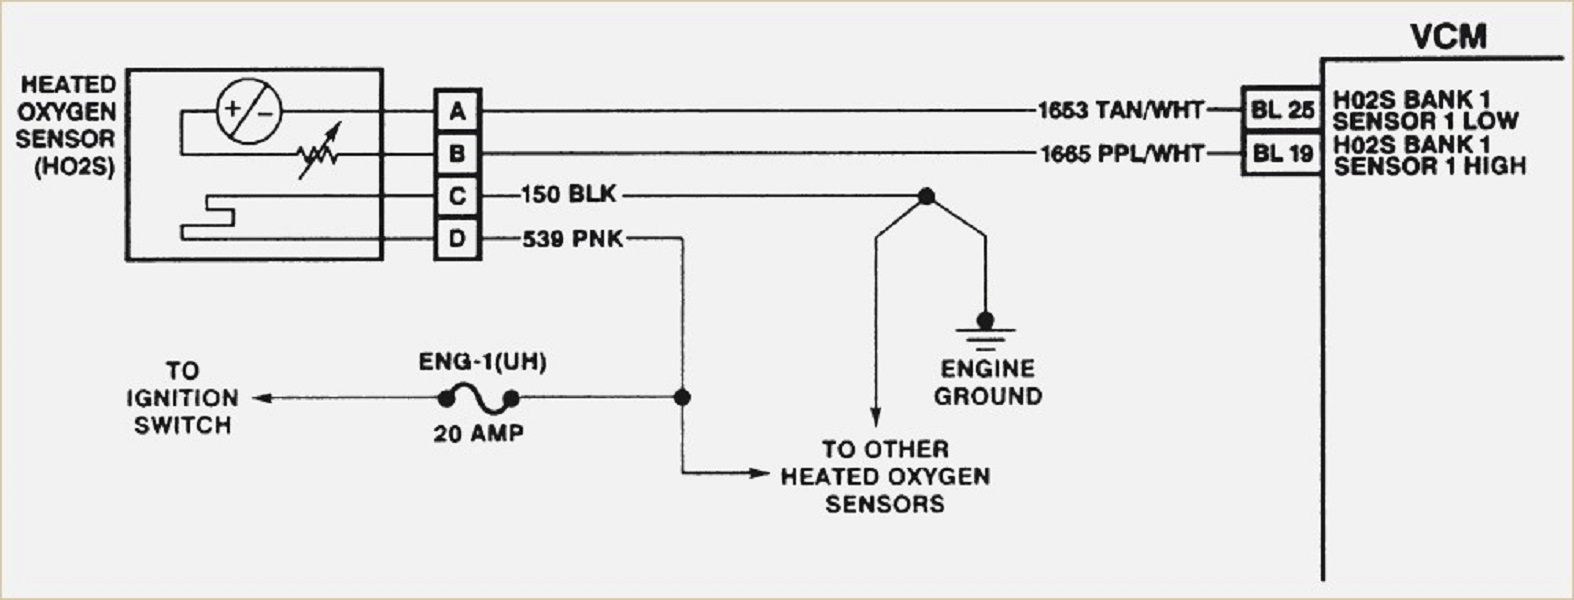 Nippondenso Oxygen Sensor Wiring Diagram - Today Wiring Diagram - 4 Wire Oxygen Sensor Wiring Diagram